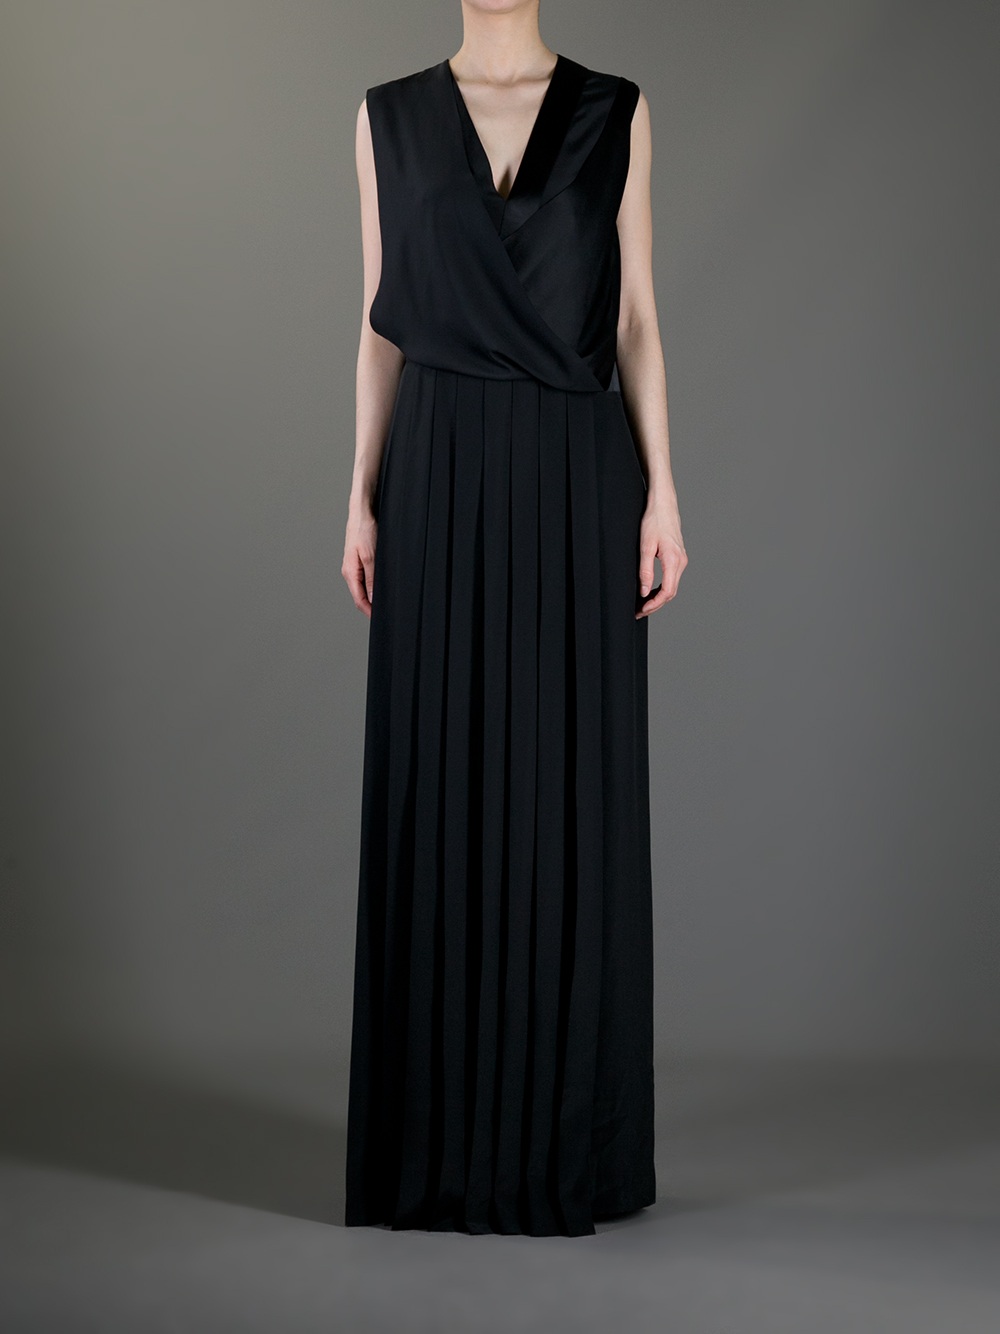 Lyst - Cedric Charlier Sleeveless Dress in Black